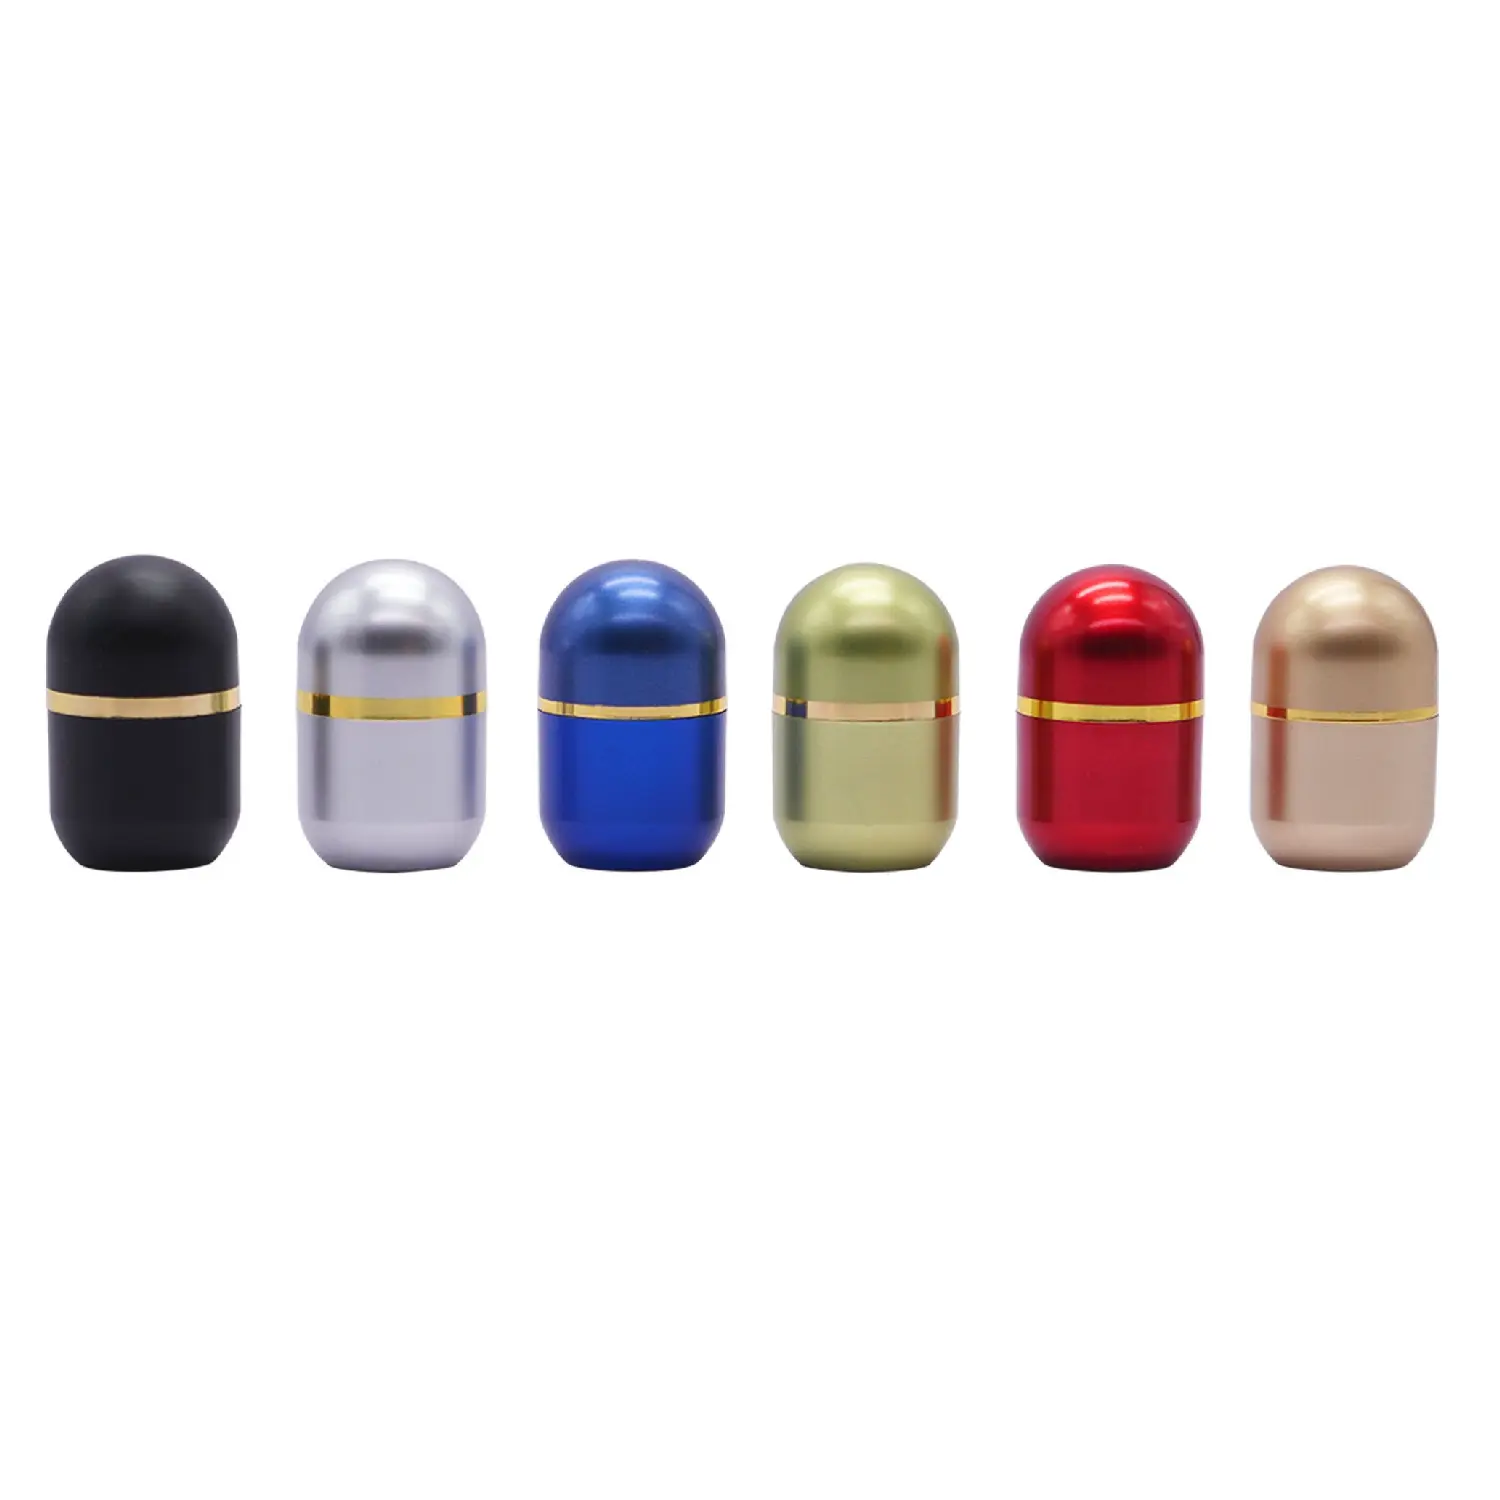 Mini 5ml Golden Ps Material Bullet Shaped Medicine Pill Capsule Vitamin Container Plastic Medicine Bottle